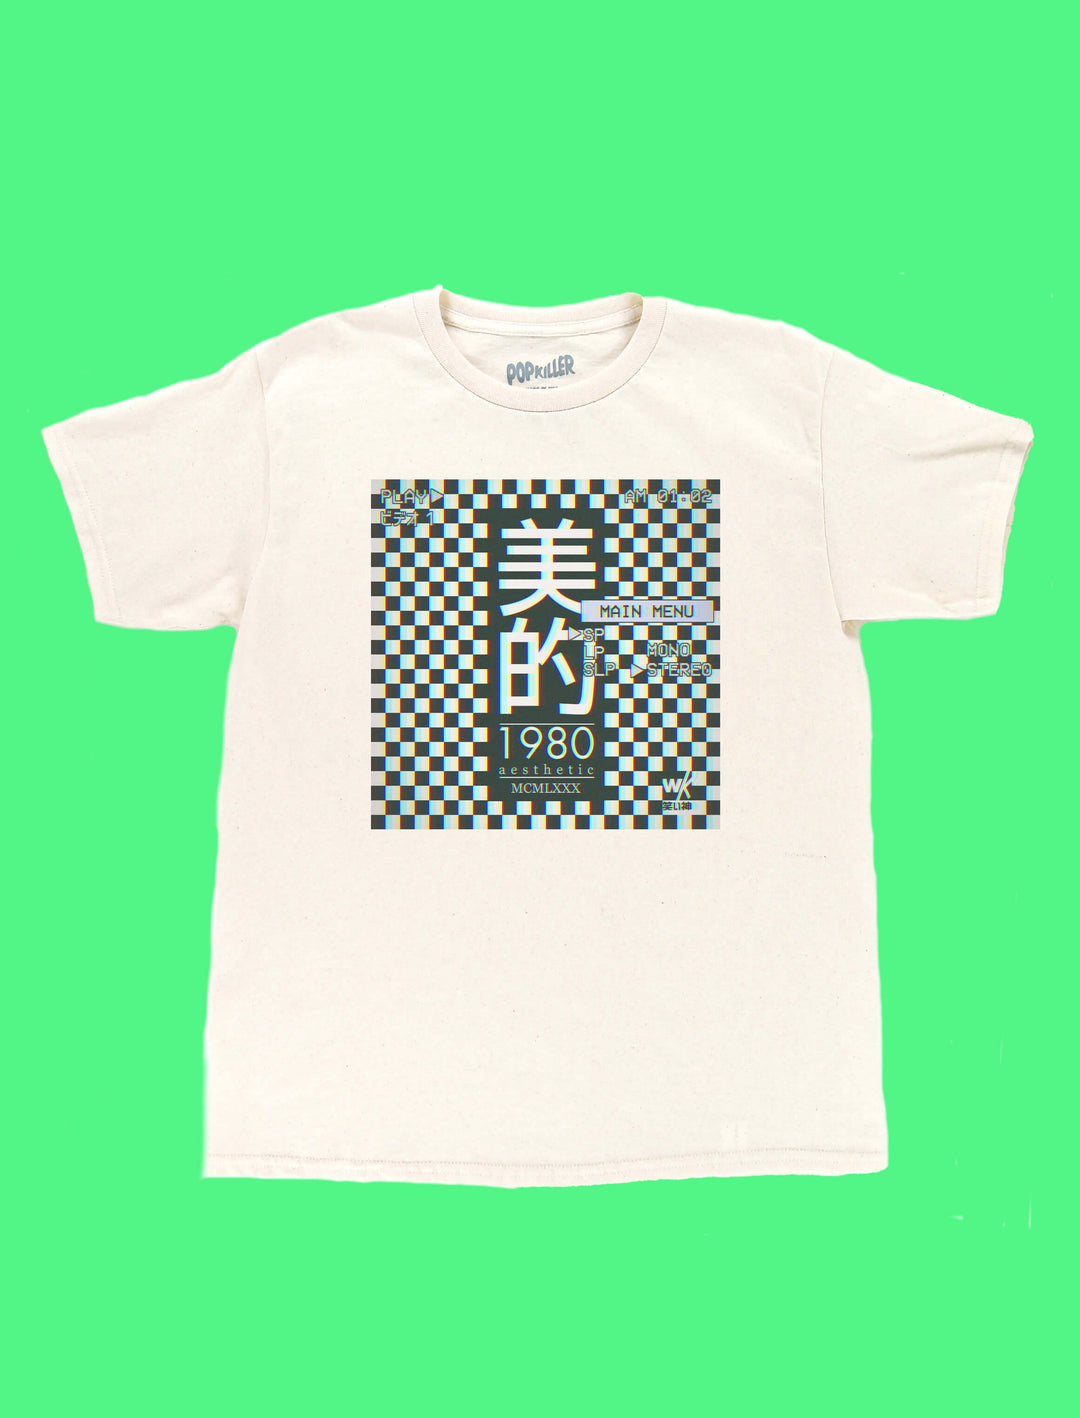 Popkiller Artist Series Warakami Vaporwave Aesthetic 1980 Youth T-shirt